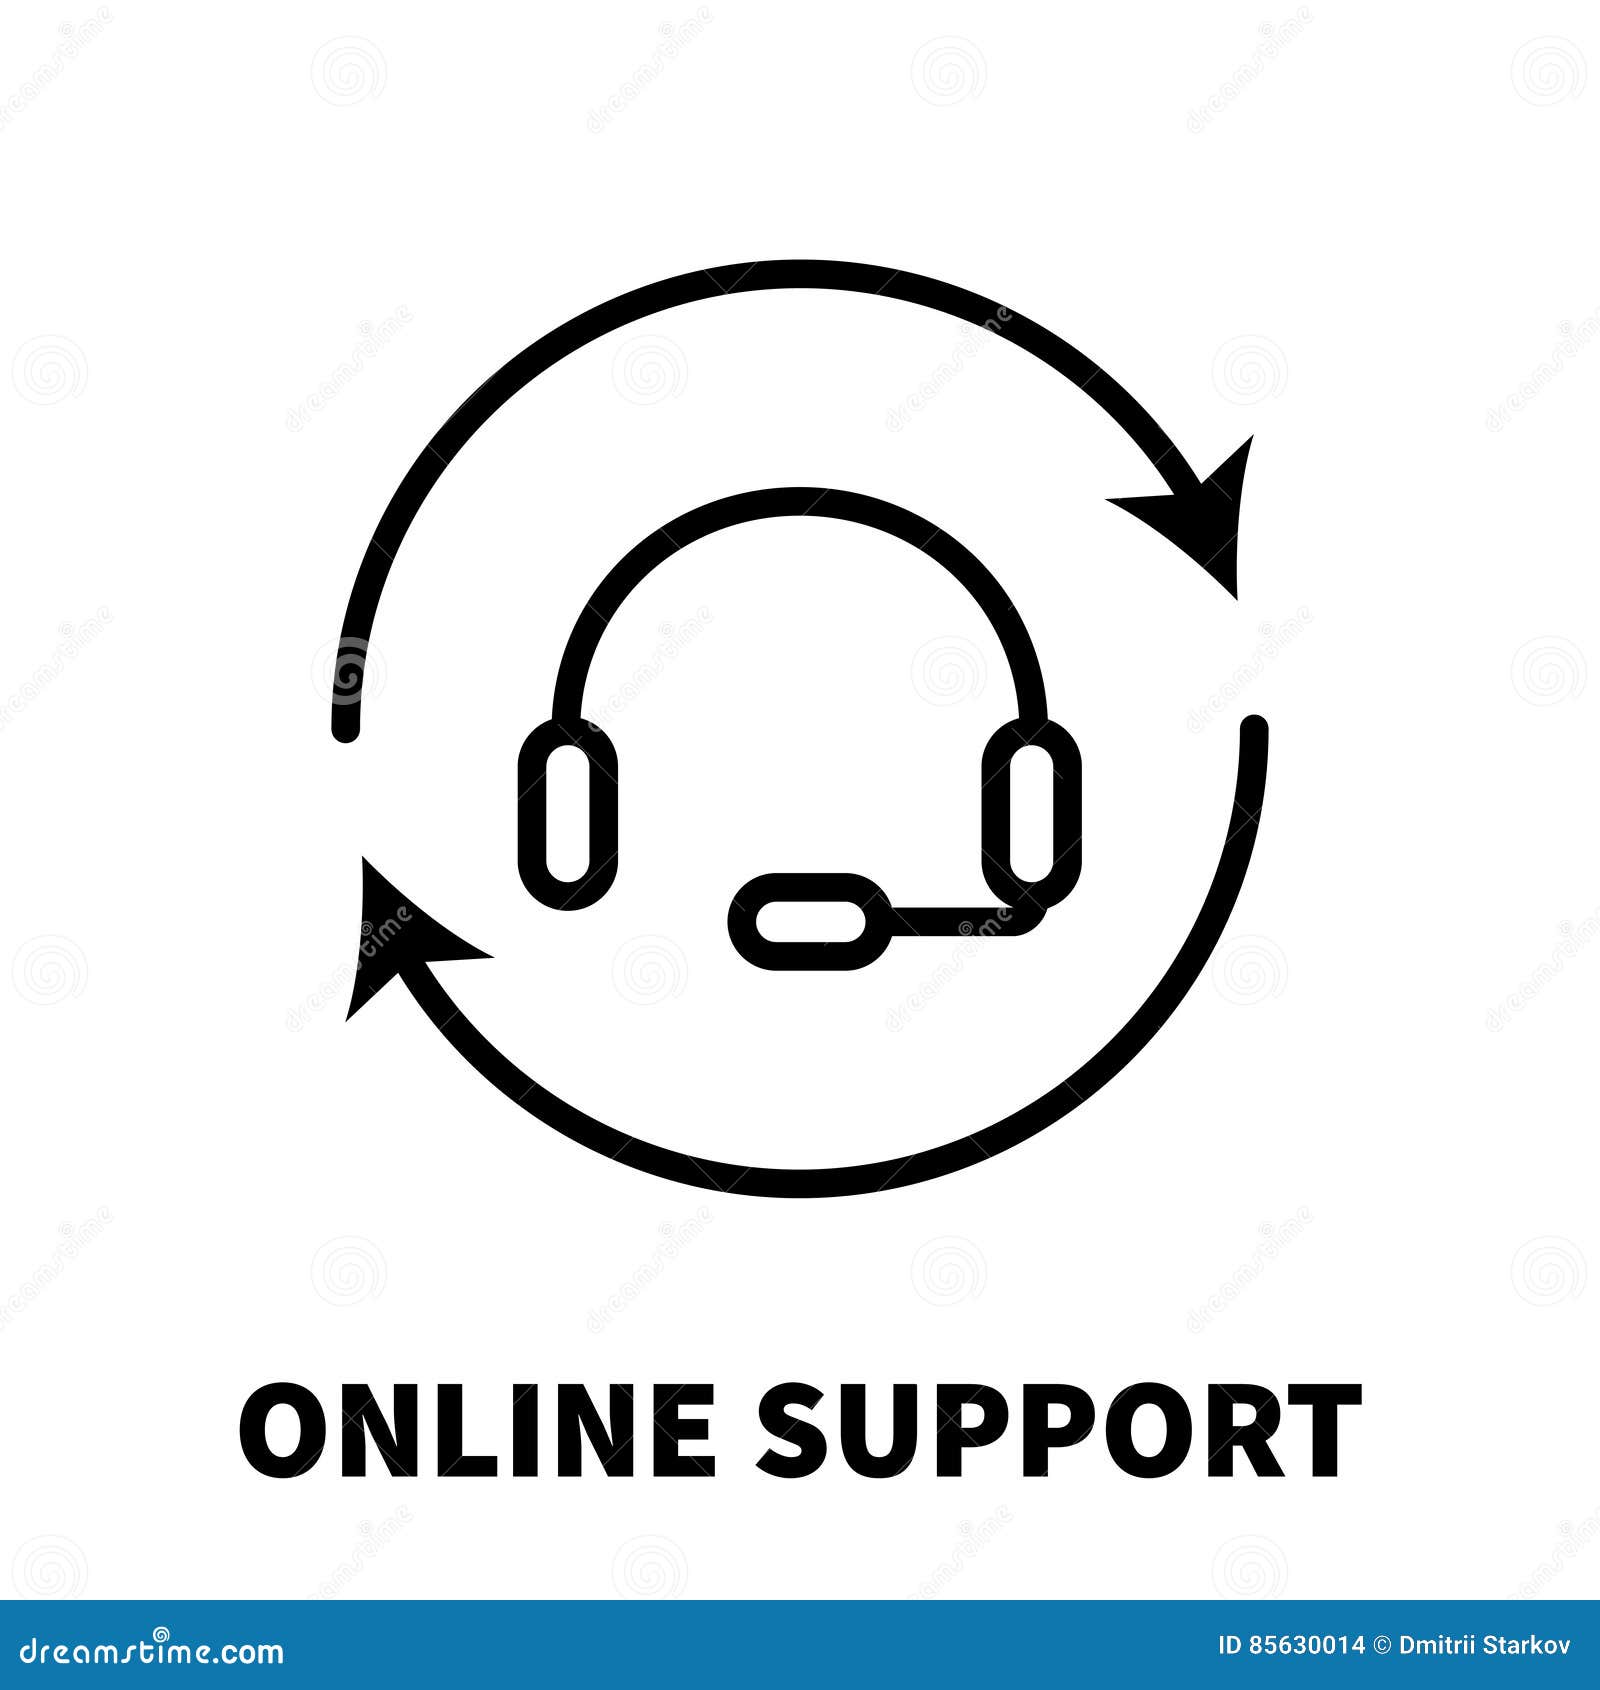 First line support. Техподдержка логотип. Support логотип. Поддержка лого схема.